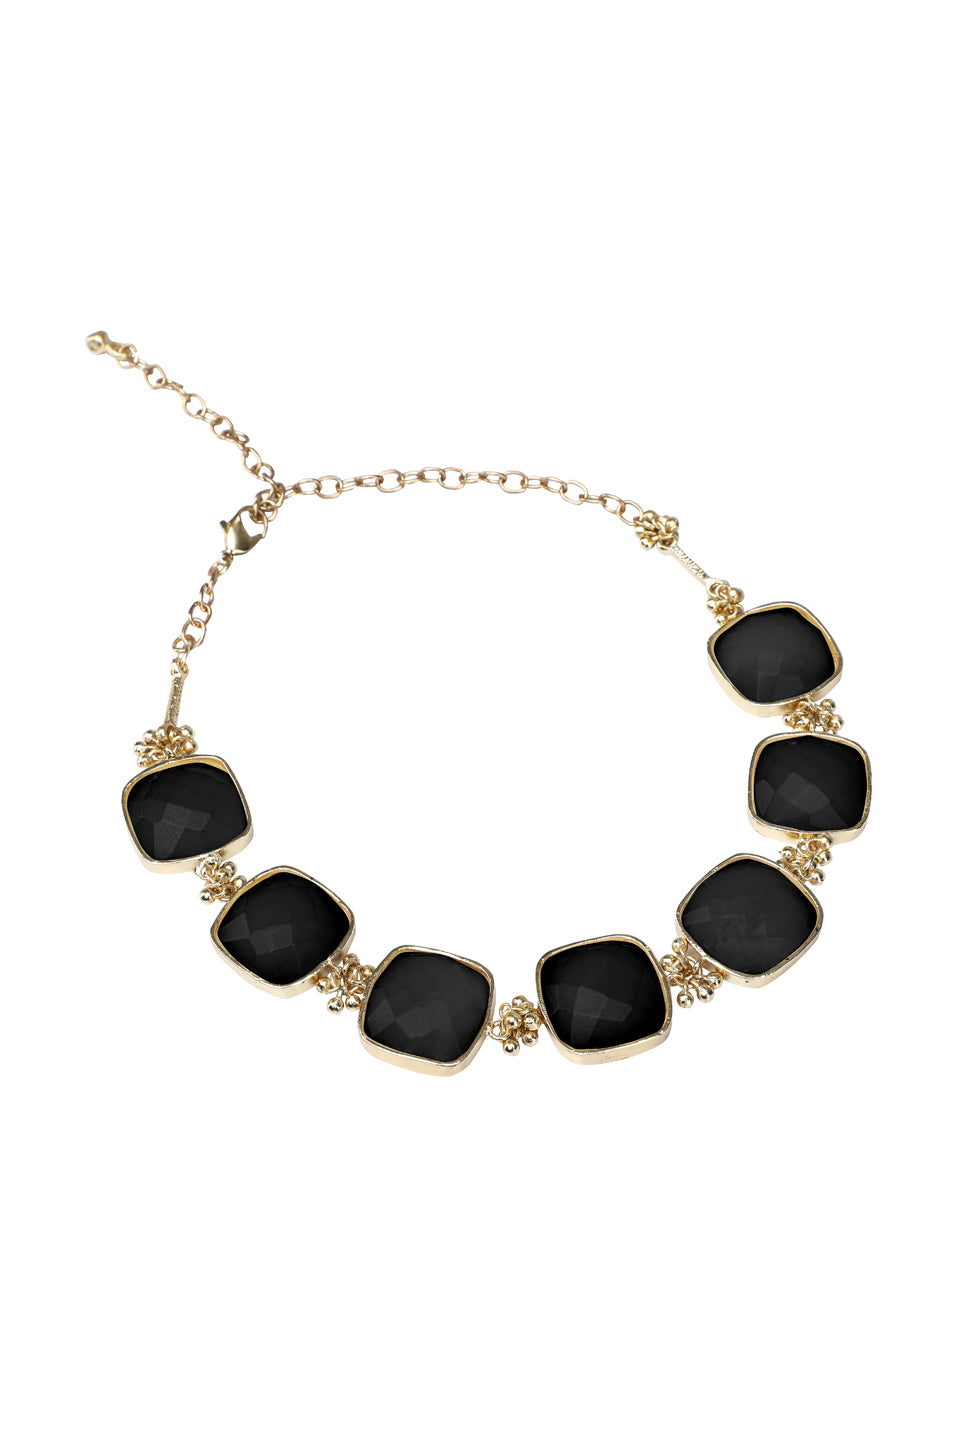 Buy Simple Party Wear 1 Gram Gold Simple Black Stone Necklace Design Online